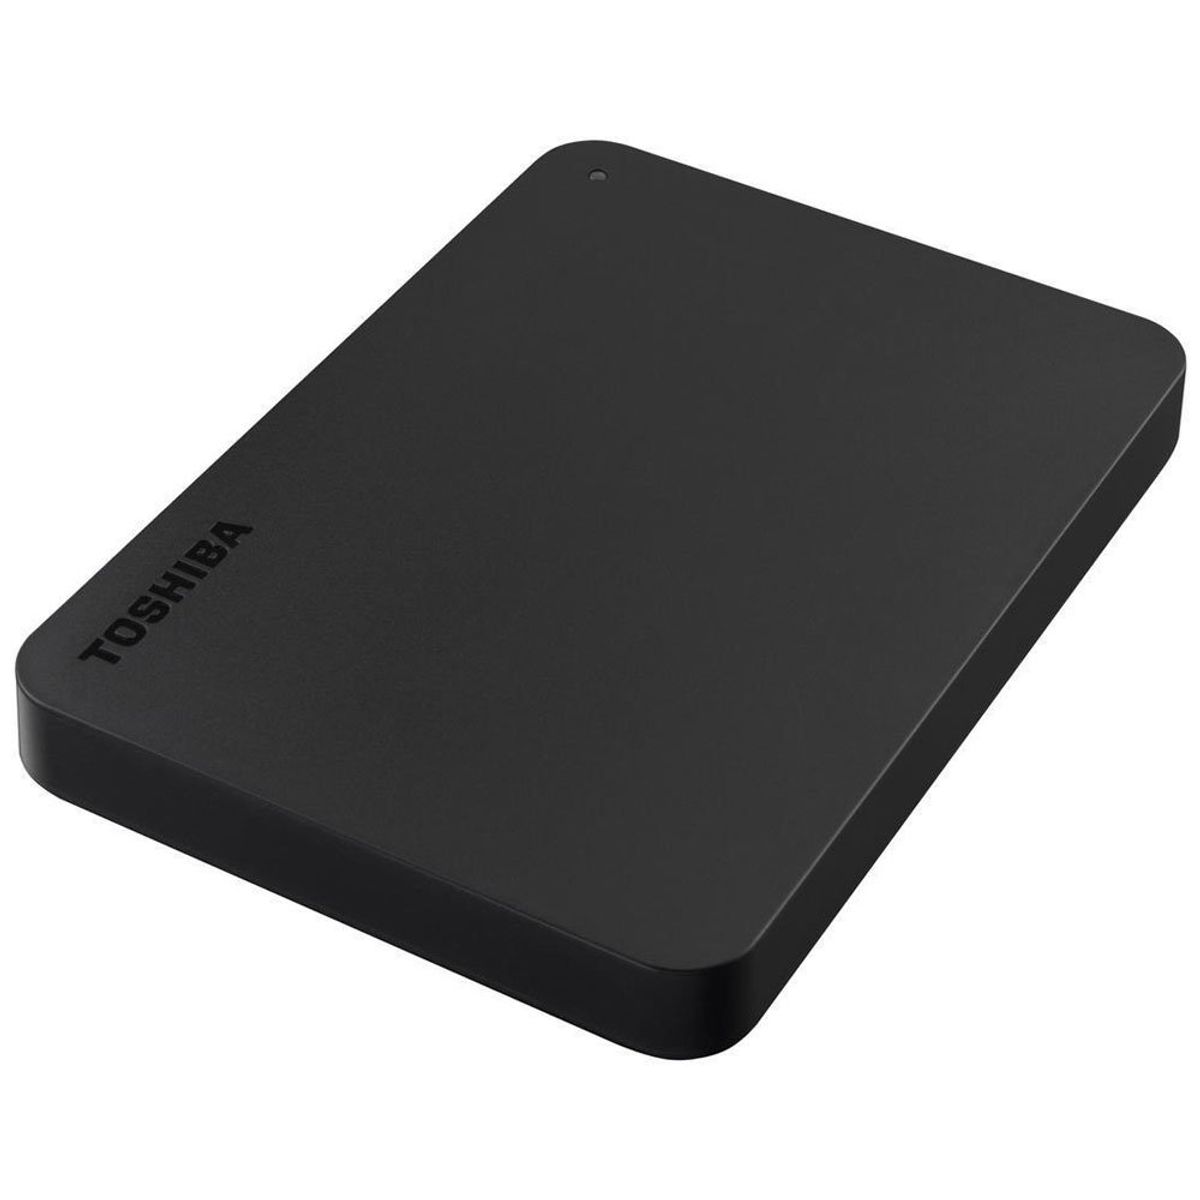 HD Externo Portátil Toshiba 4TB Canvio Basics USB 3.0 Preto 